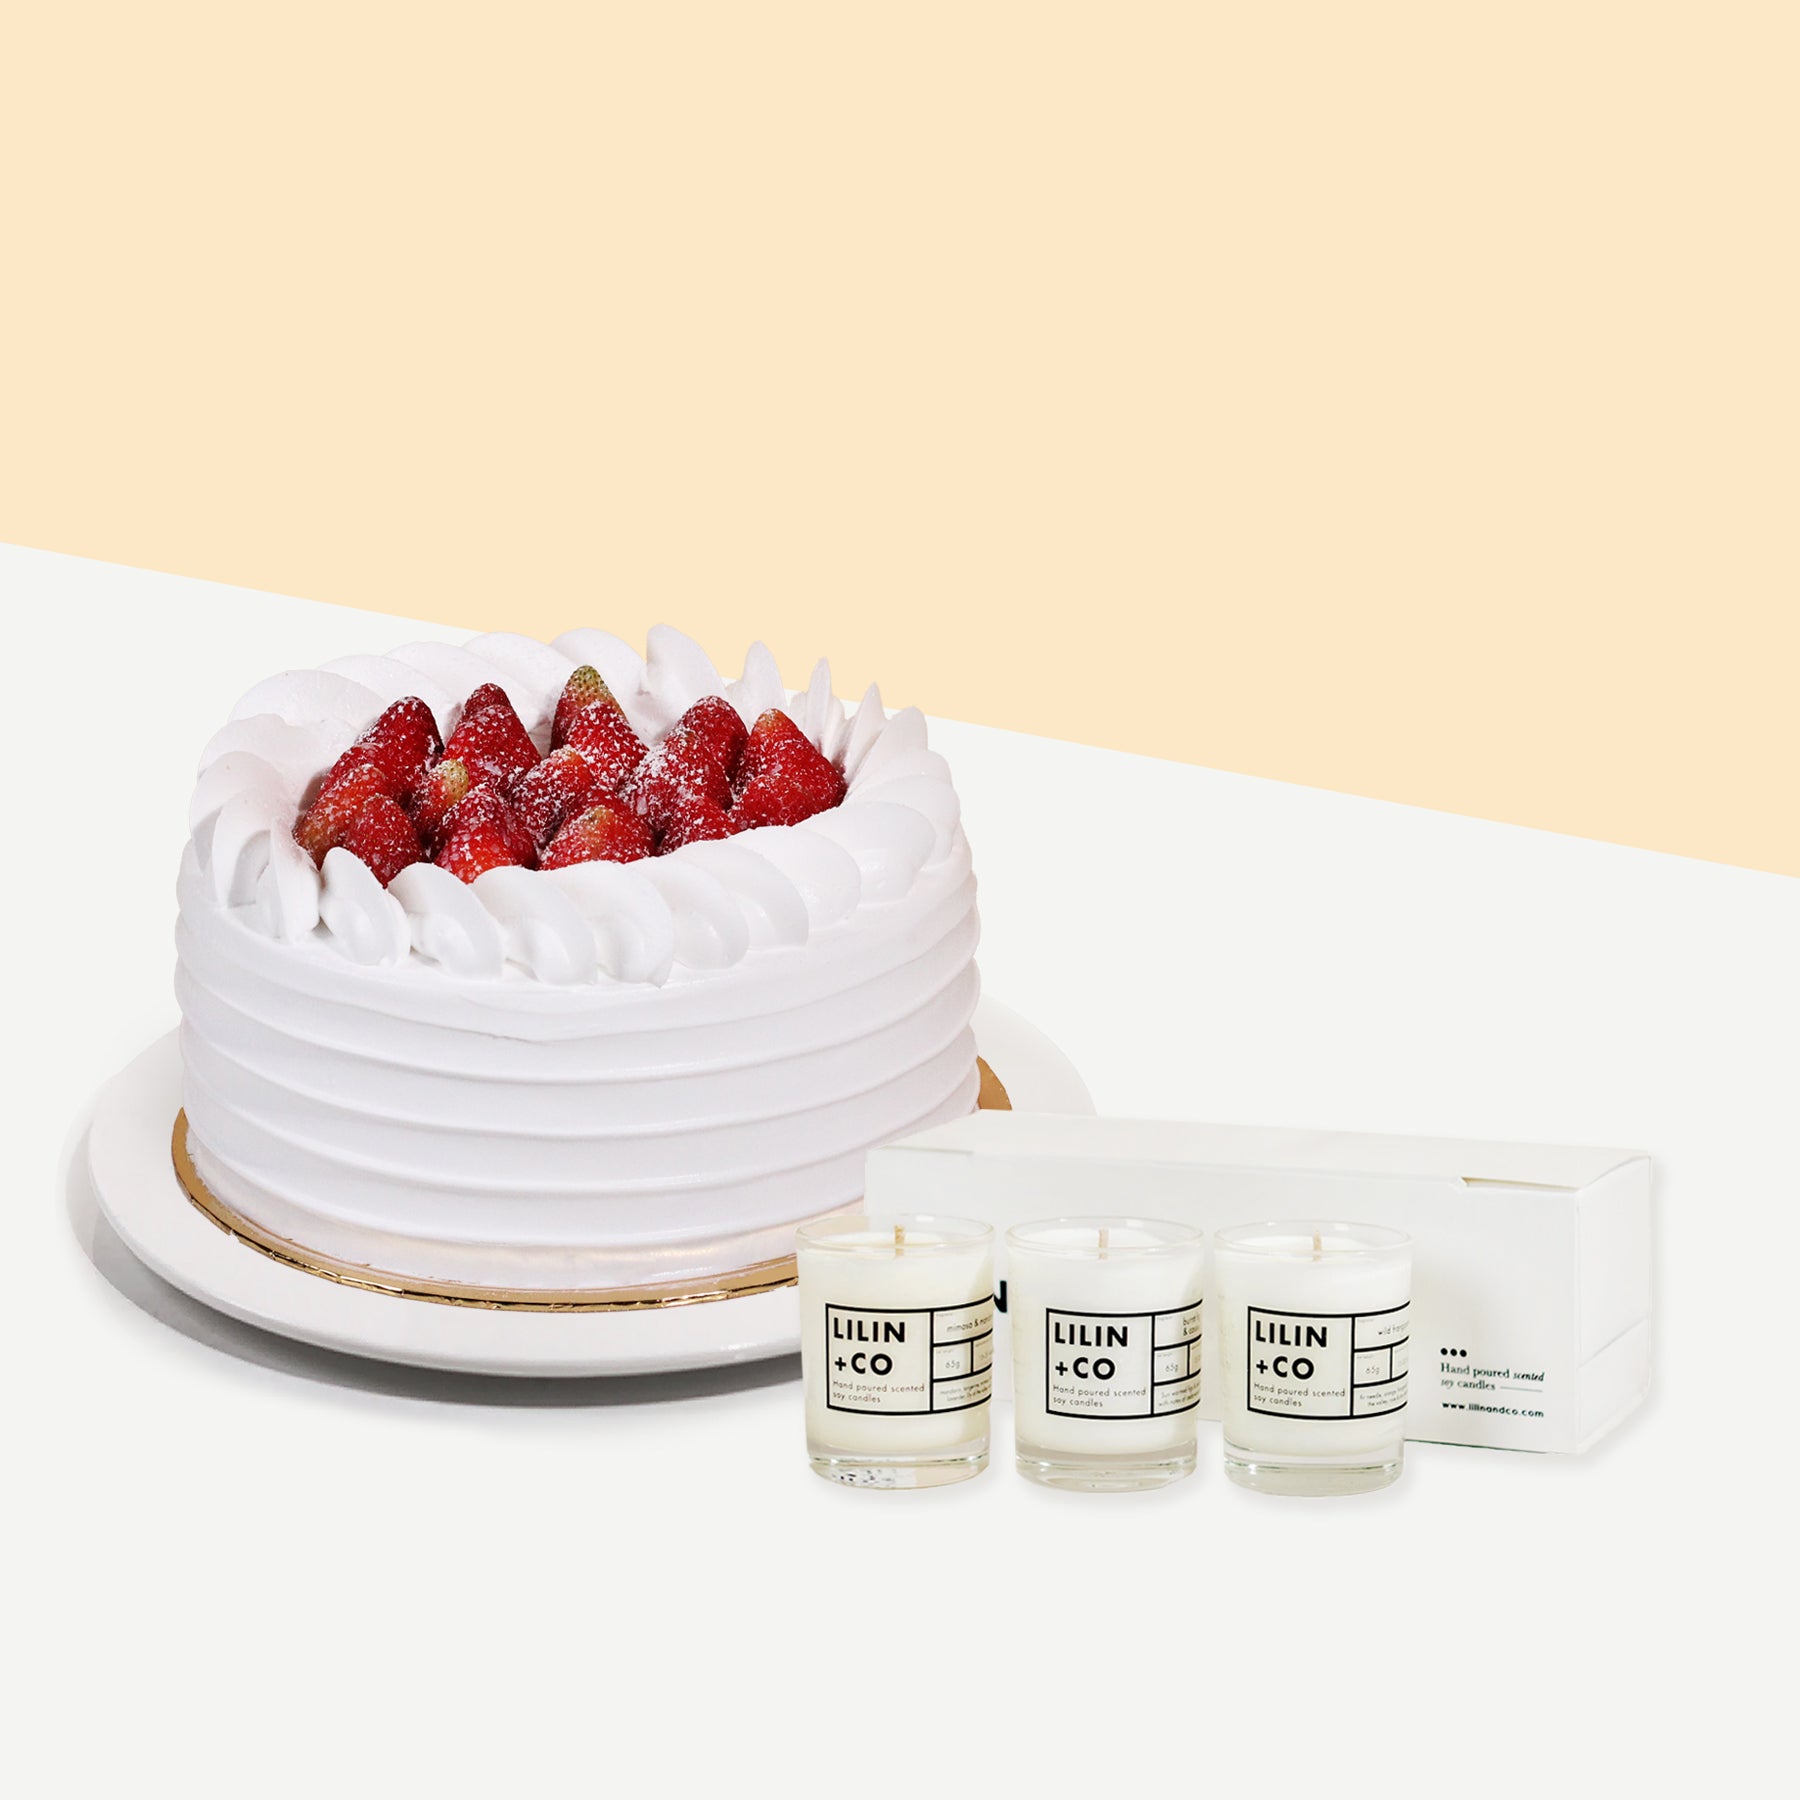 Mini Strawberry Sheet Cake (Uses fresh strawberries) - A Cozy Kitchen